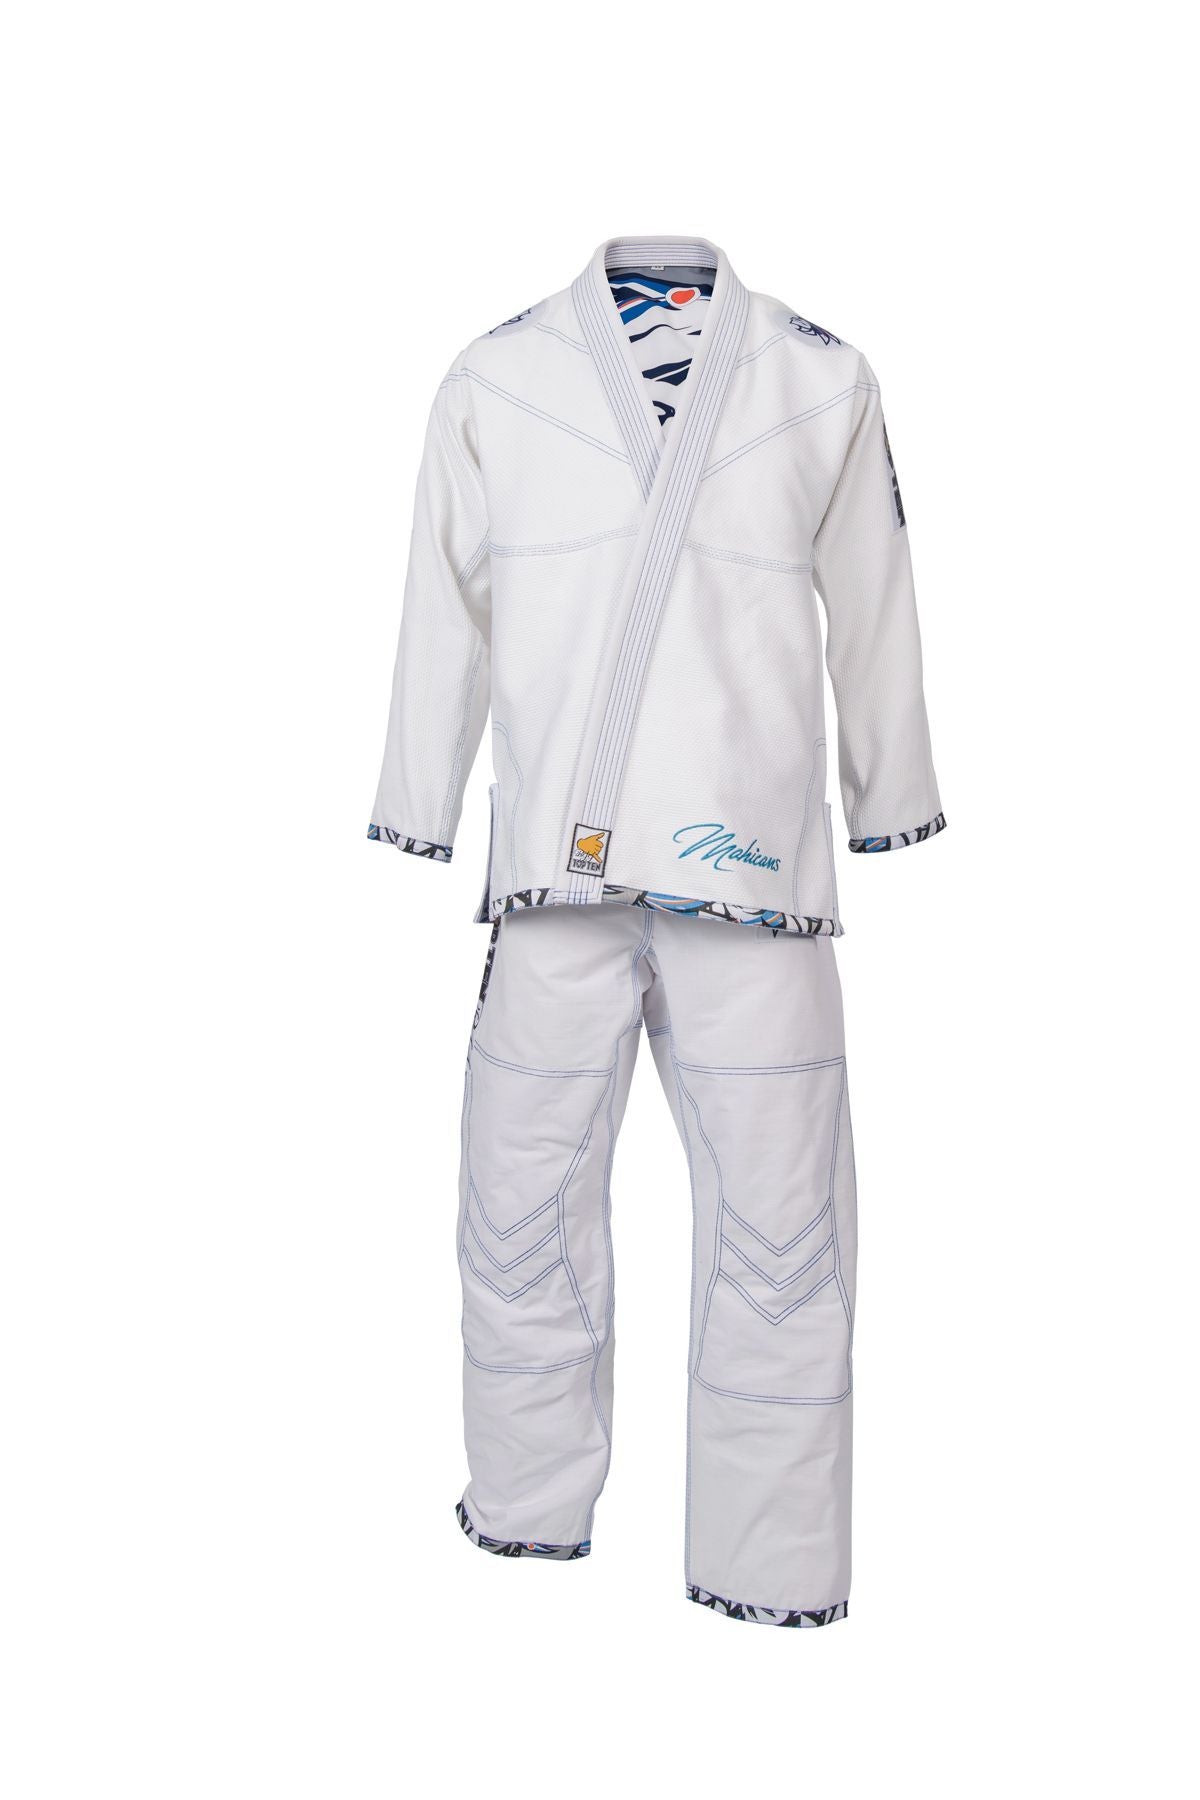 Top Ten Mohicans d'uniforme de Jiu Jitsu brésilien - blanc, 15123-1